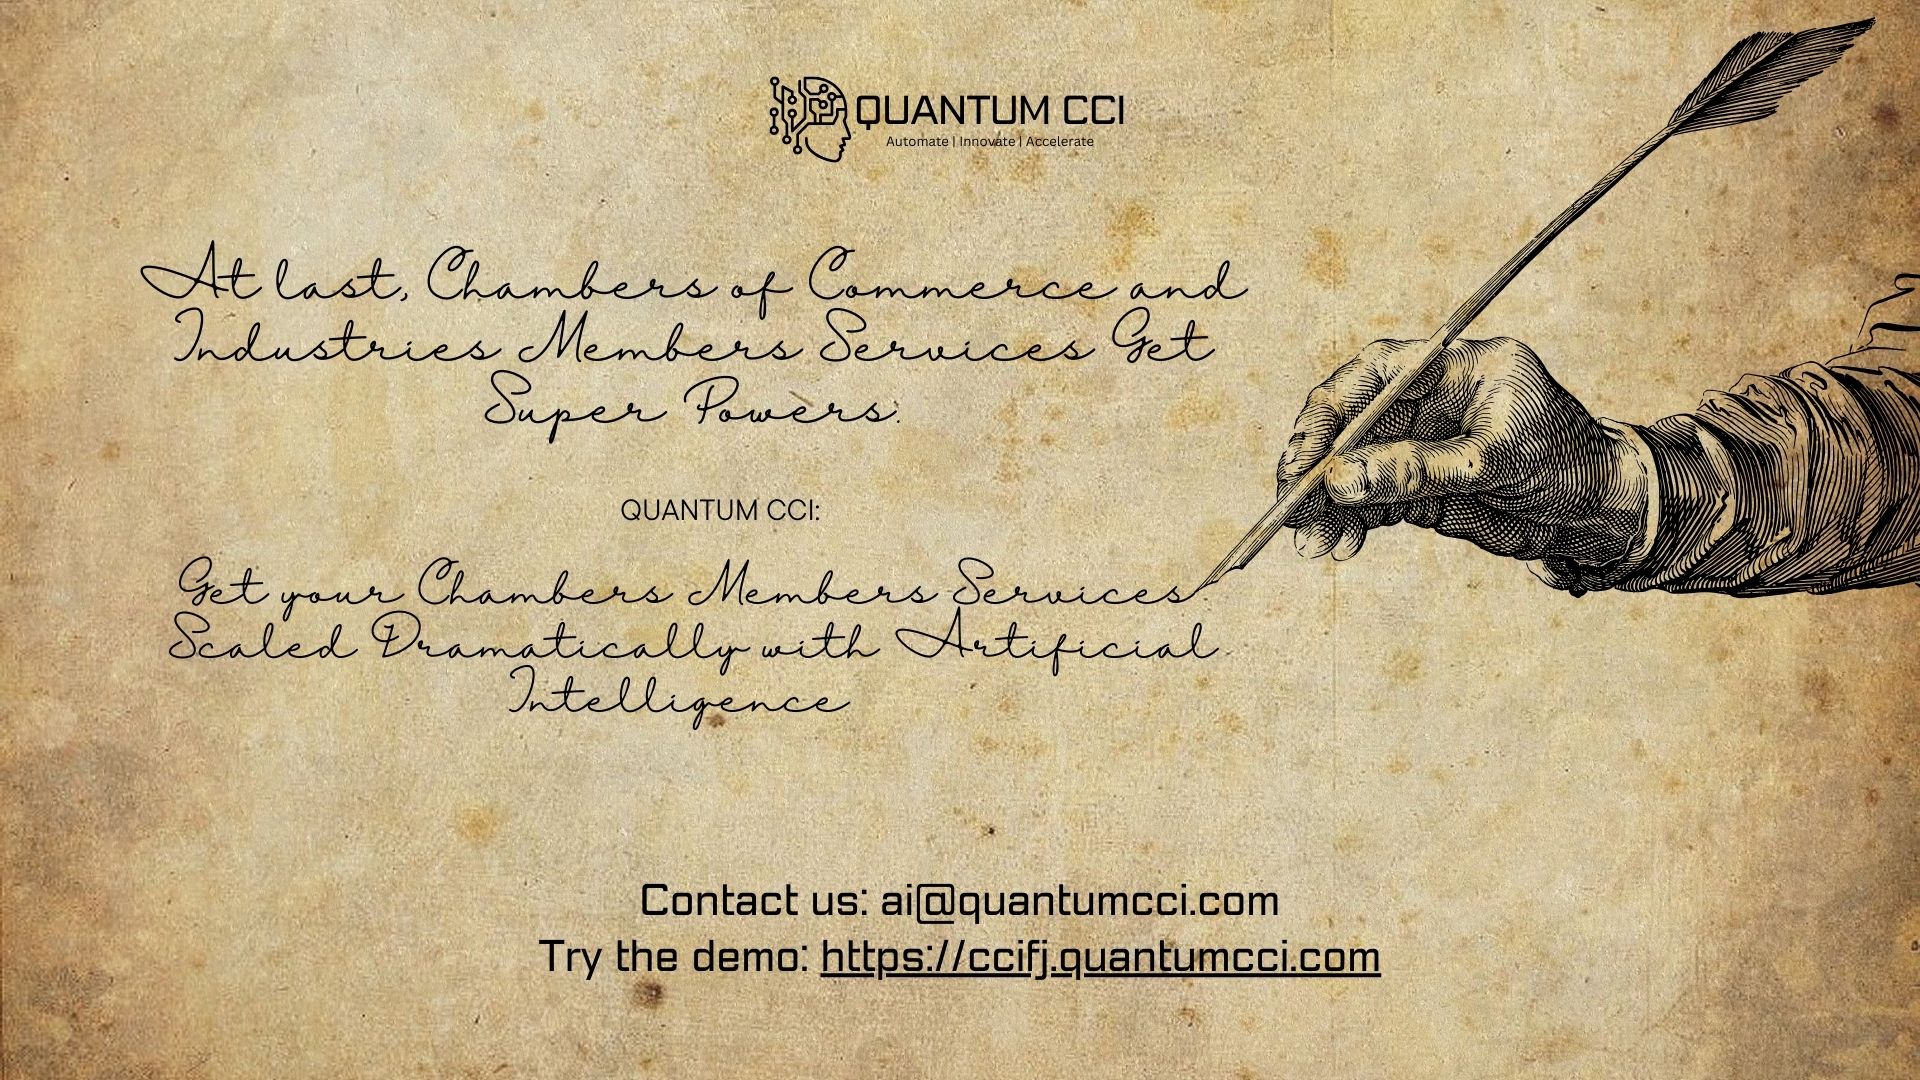 Quantum CCI - Coming Soon